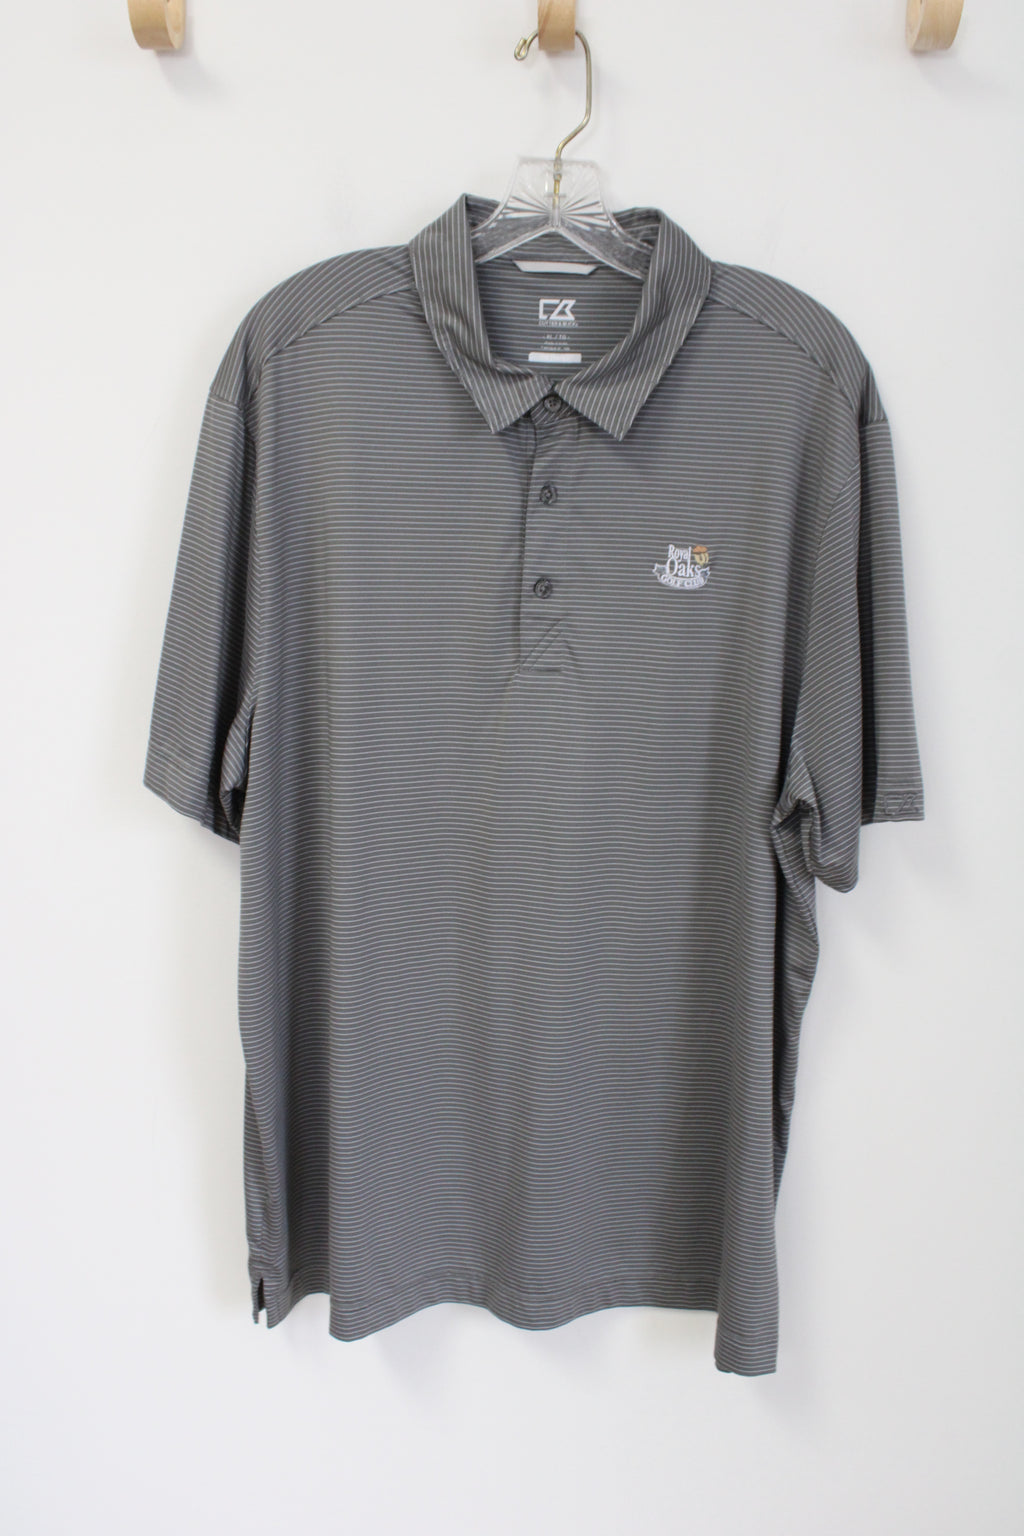 Cutter & Buck Gray Striped Royal Oaks Golf Club Polo Shirt | XL